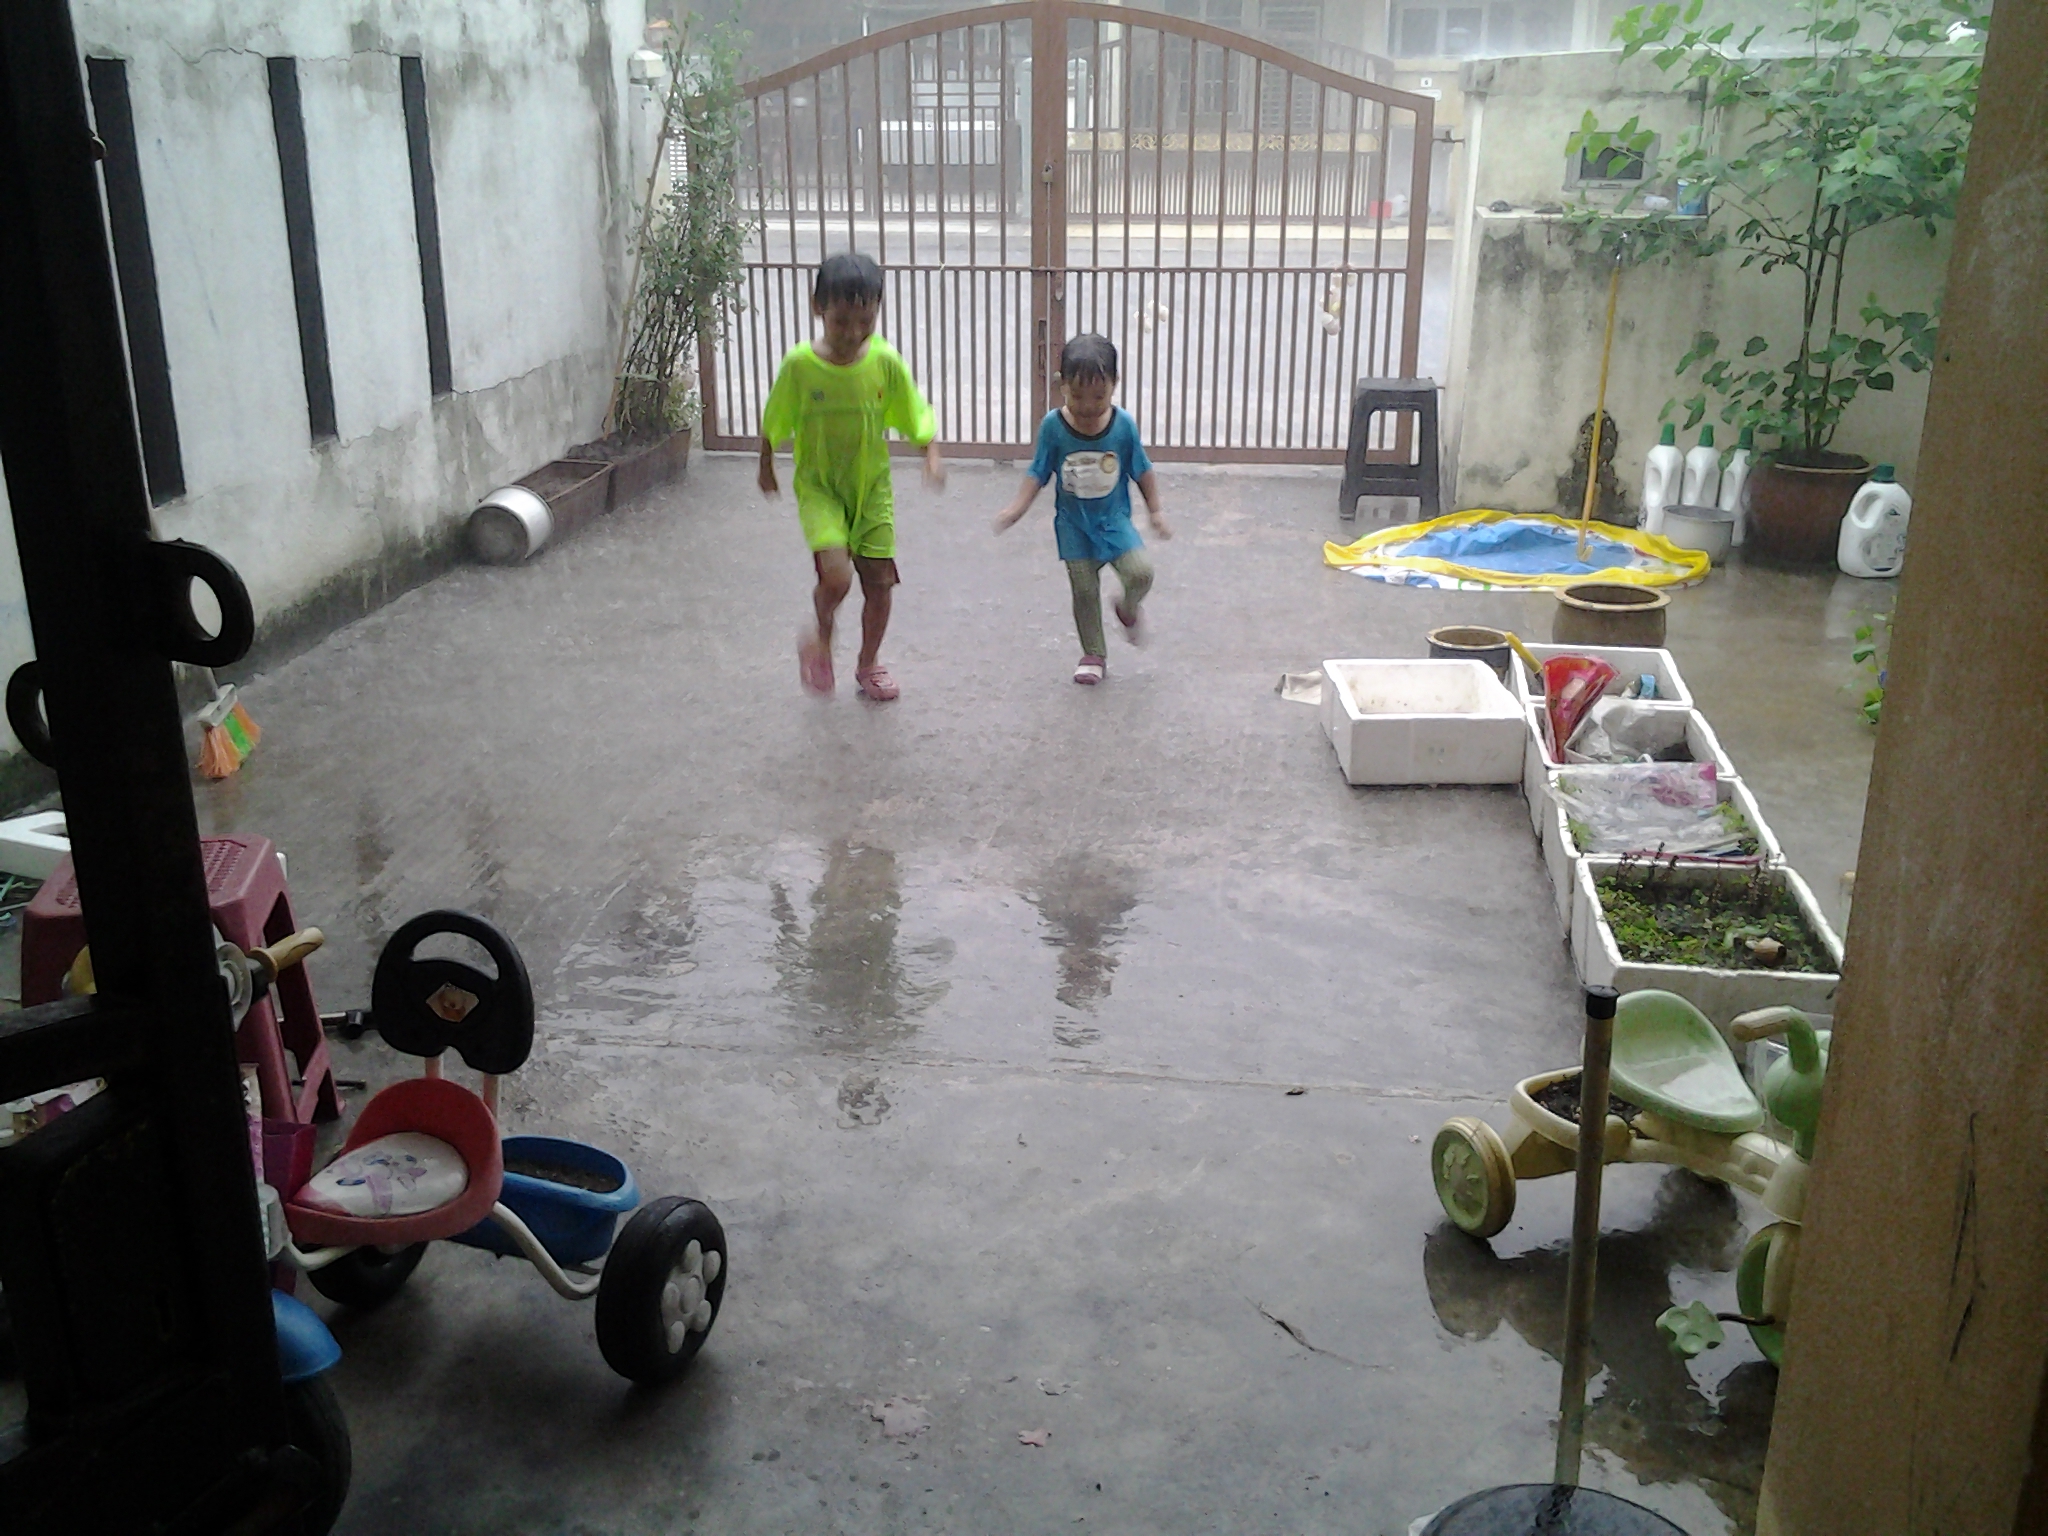 My children playing in the rain